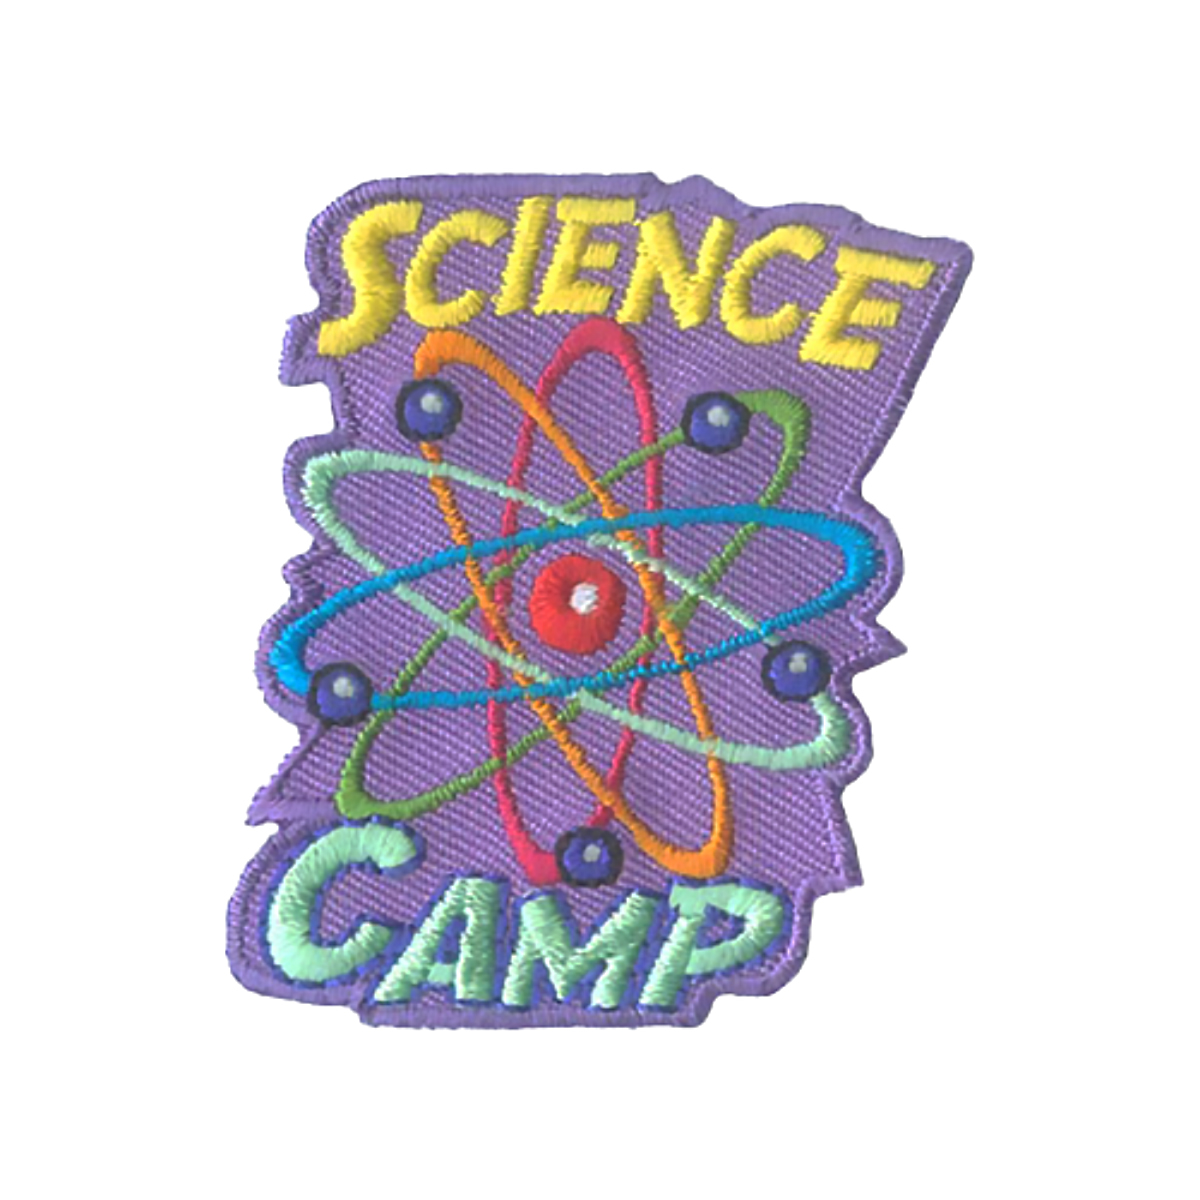 Science Camp - W